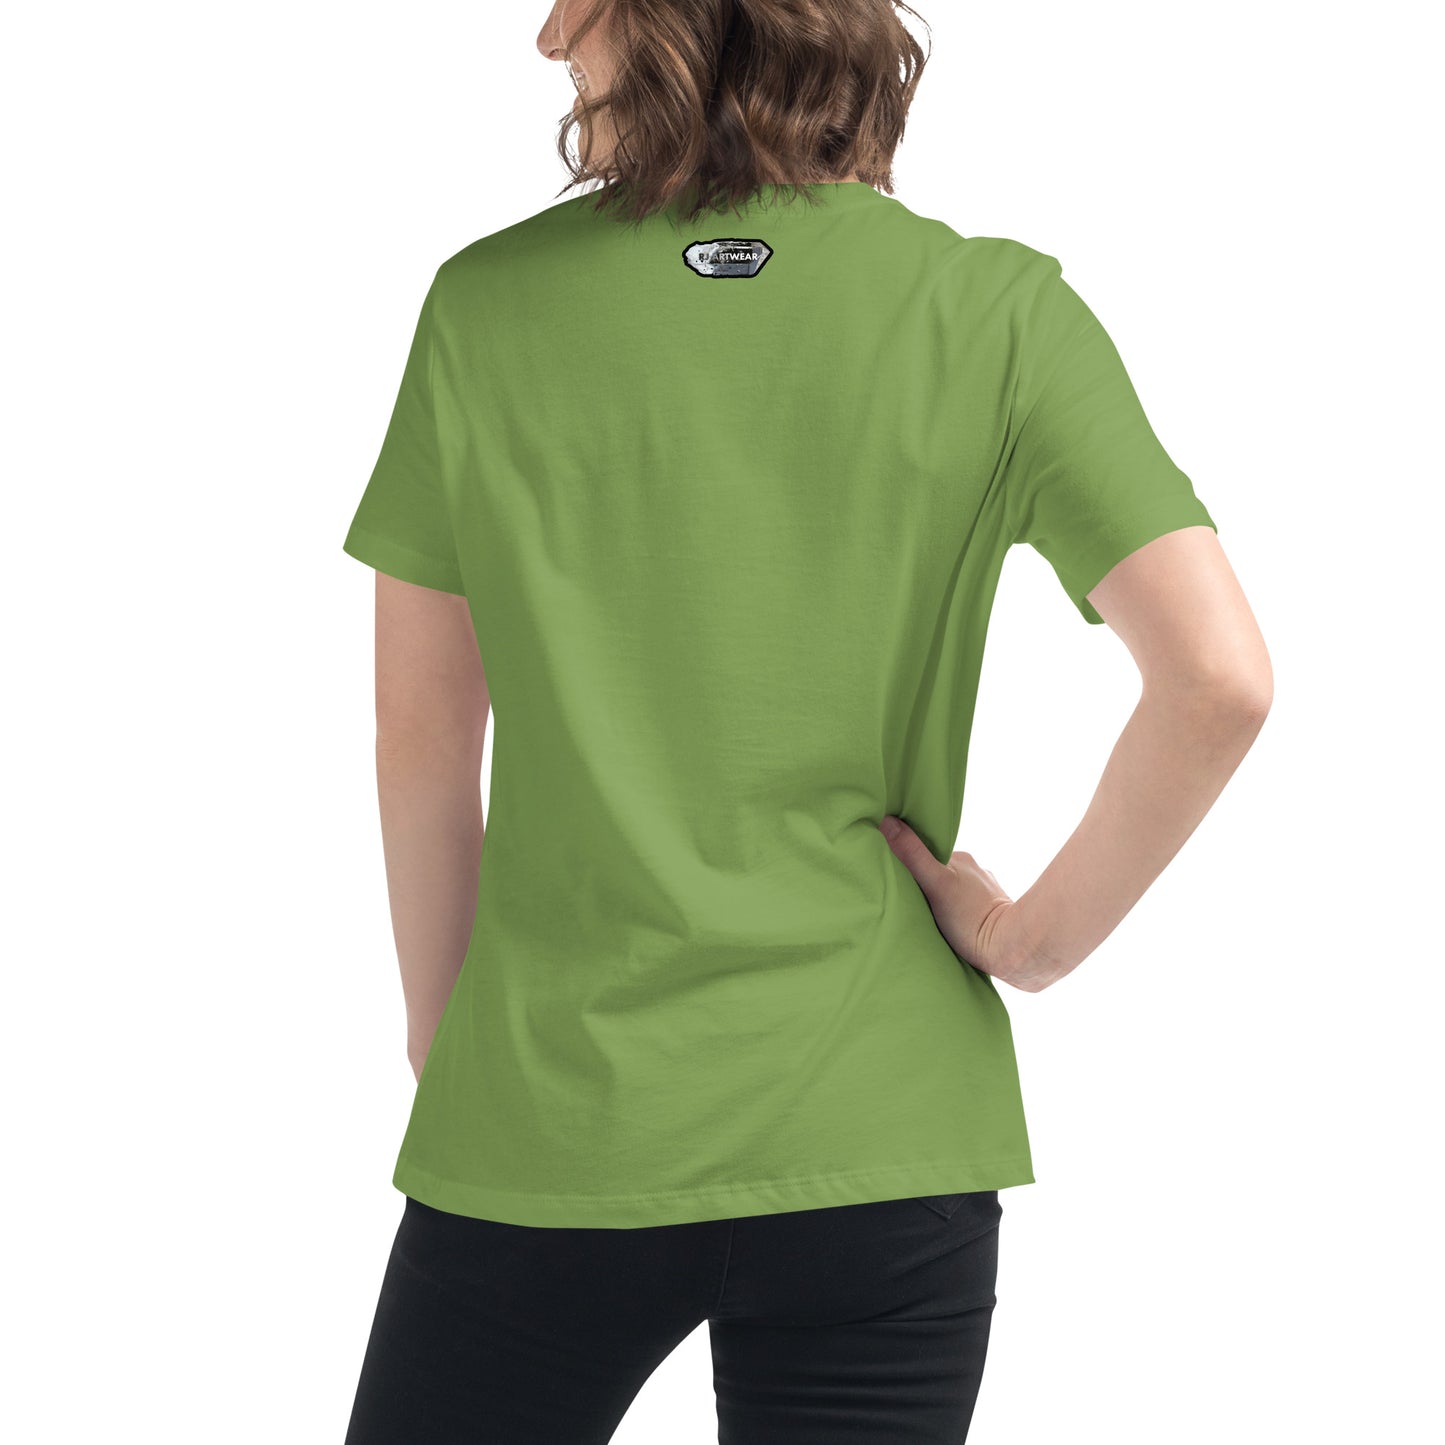 Ohio Fluorite Watercolor Women's Relaxed T-Shirt